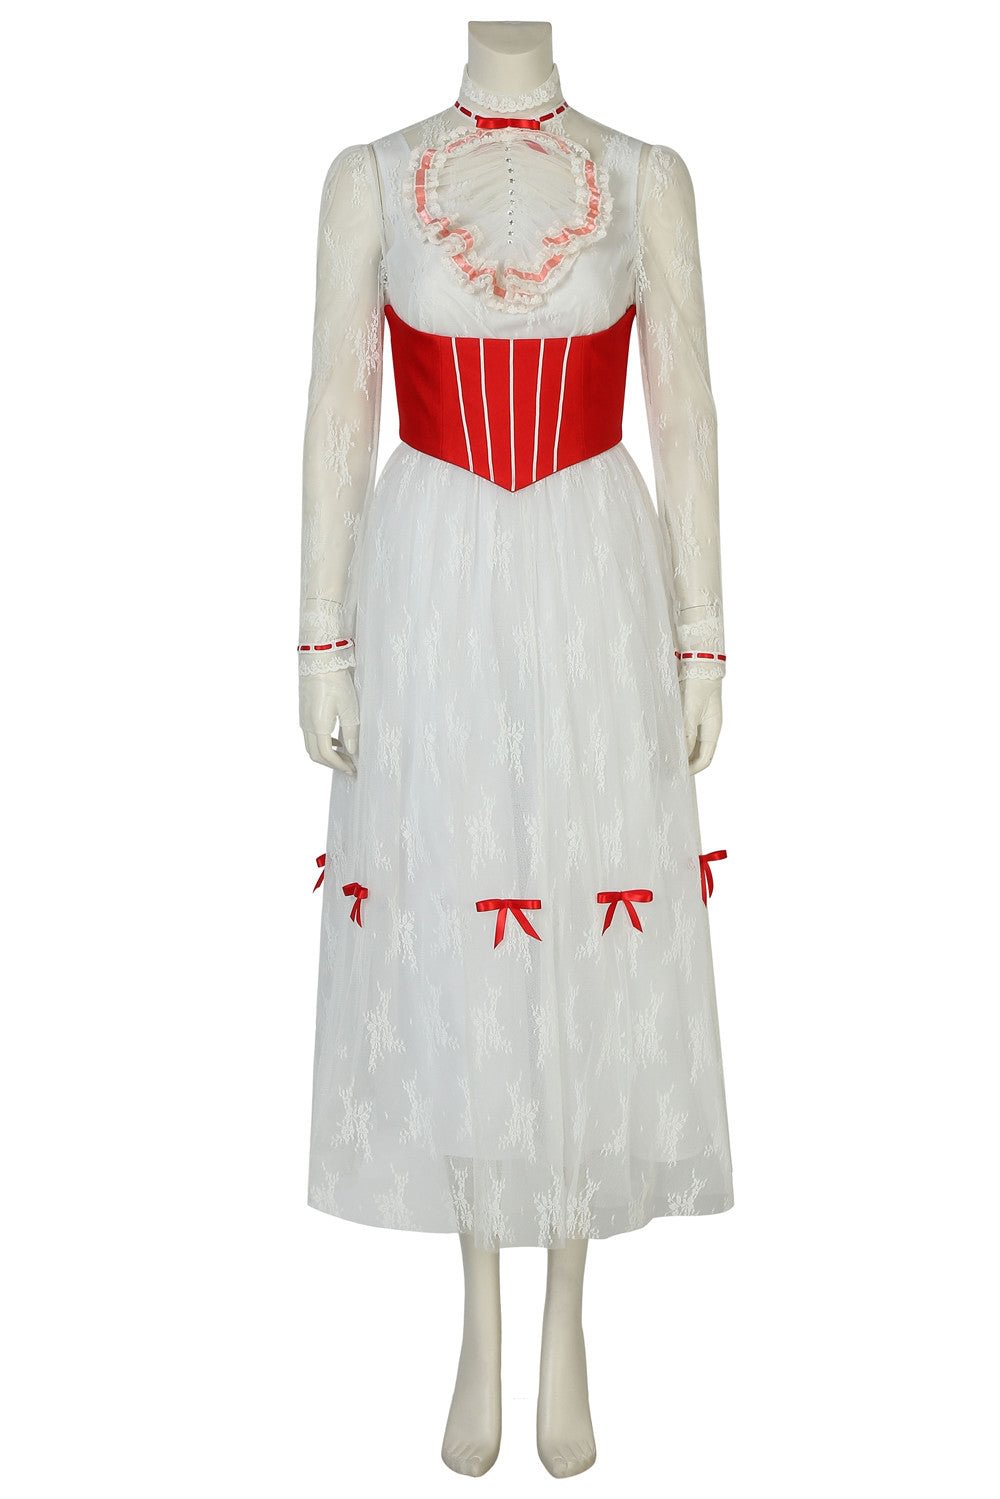 Mary Poppins White Dress Halloween Cosplay Costume